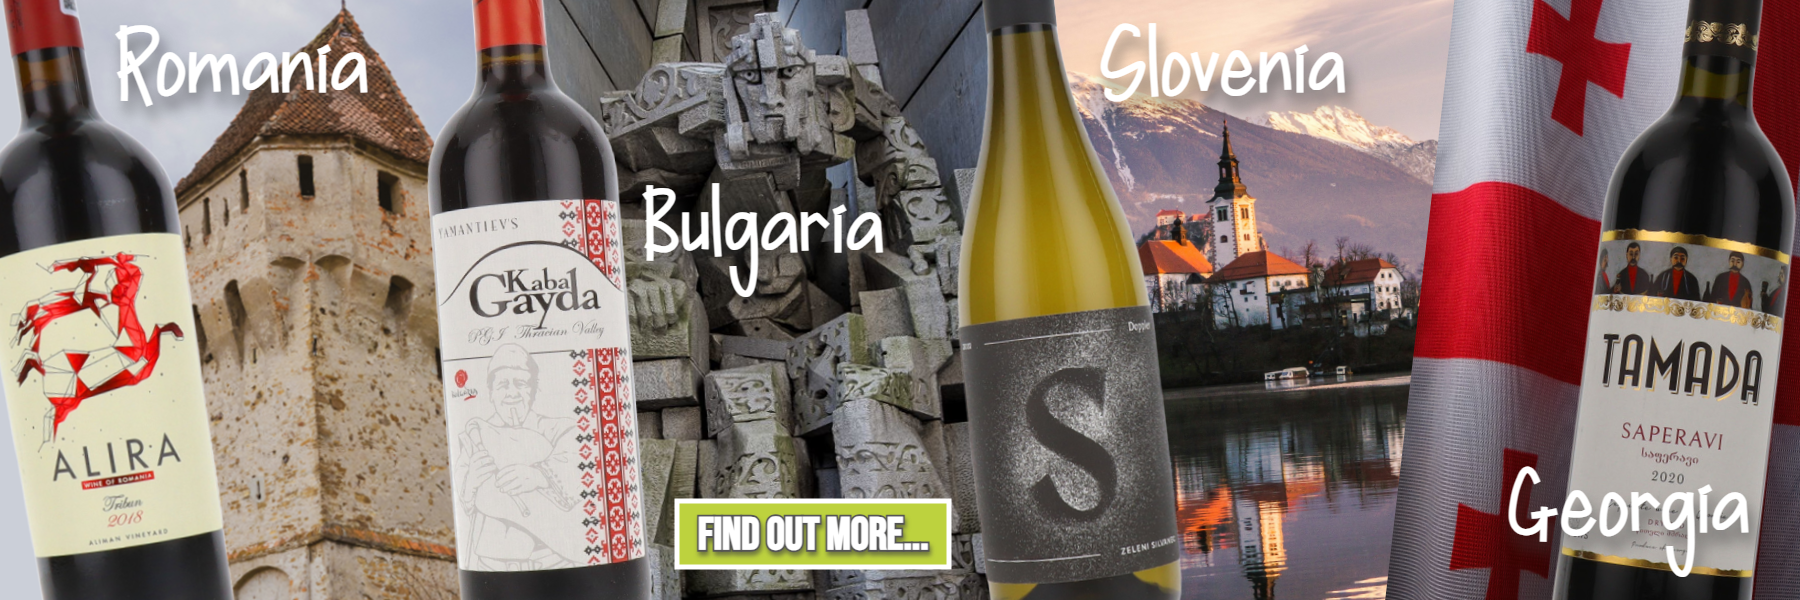 Shop "Wines by Country" Romania, Bulgaria, Slovenia & Georgia